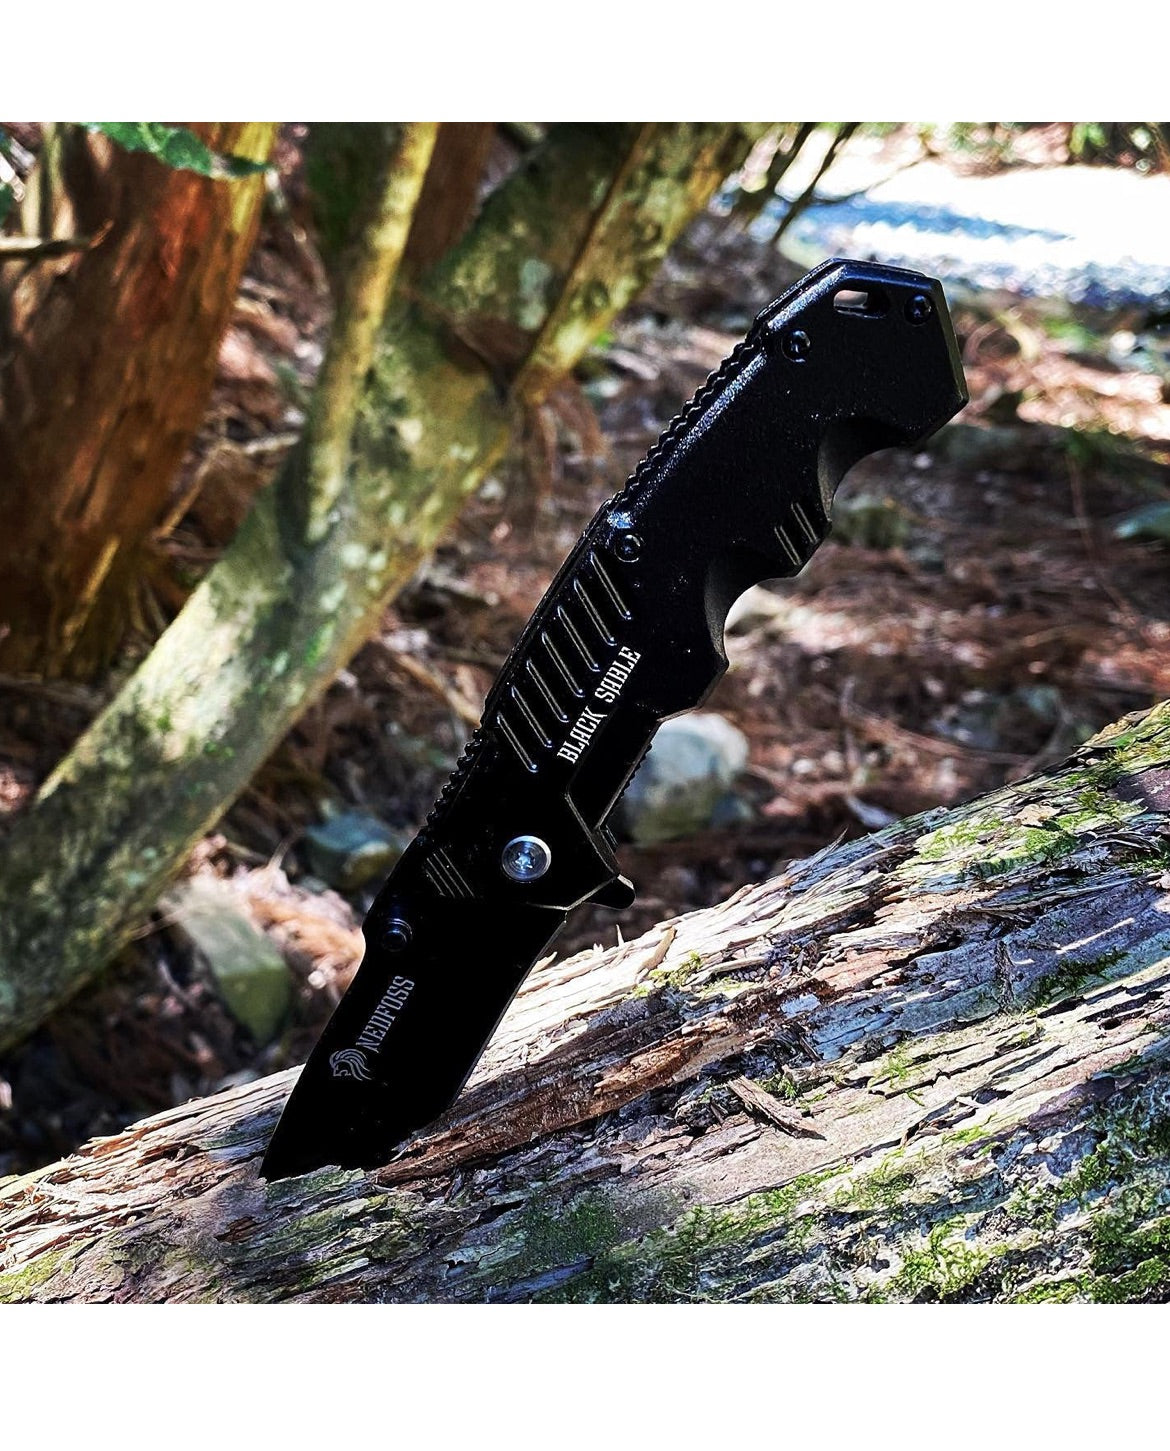 Black Powder Coated Folding Pocket Knife, Fishing Hiking Survival Knife, With Belt Clip